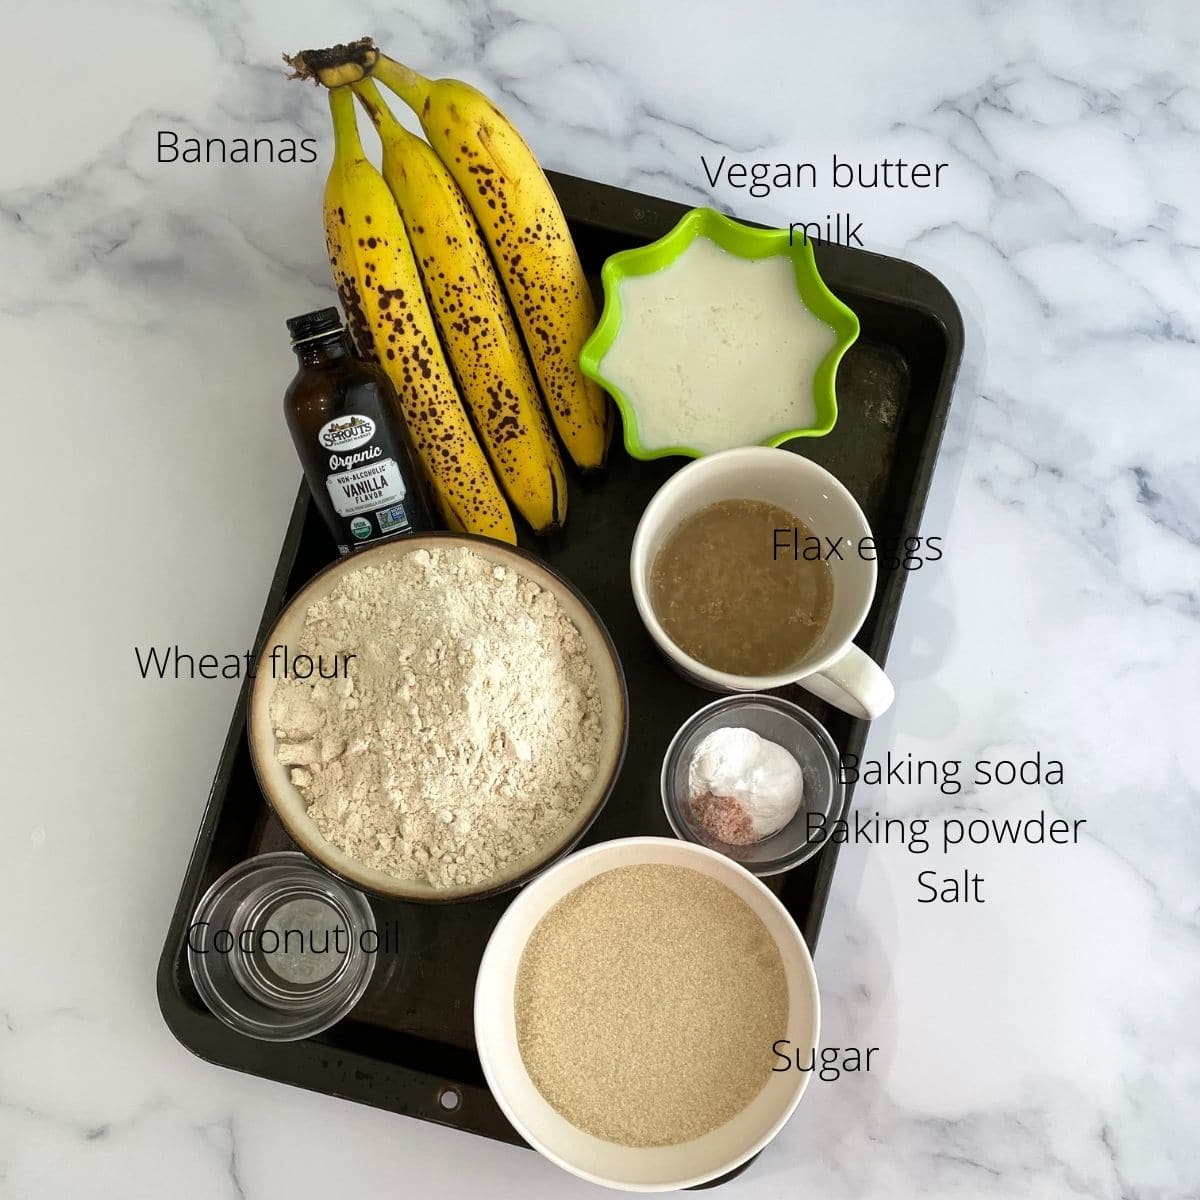 Baking tray is with banana cake ingredients like banana, oil, sugar, and baking powder.